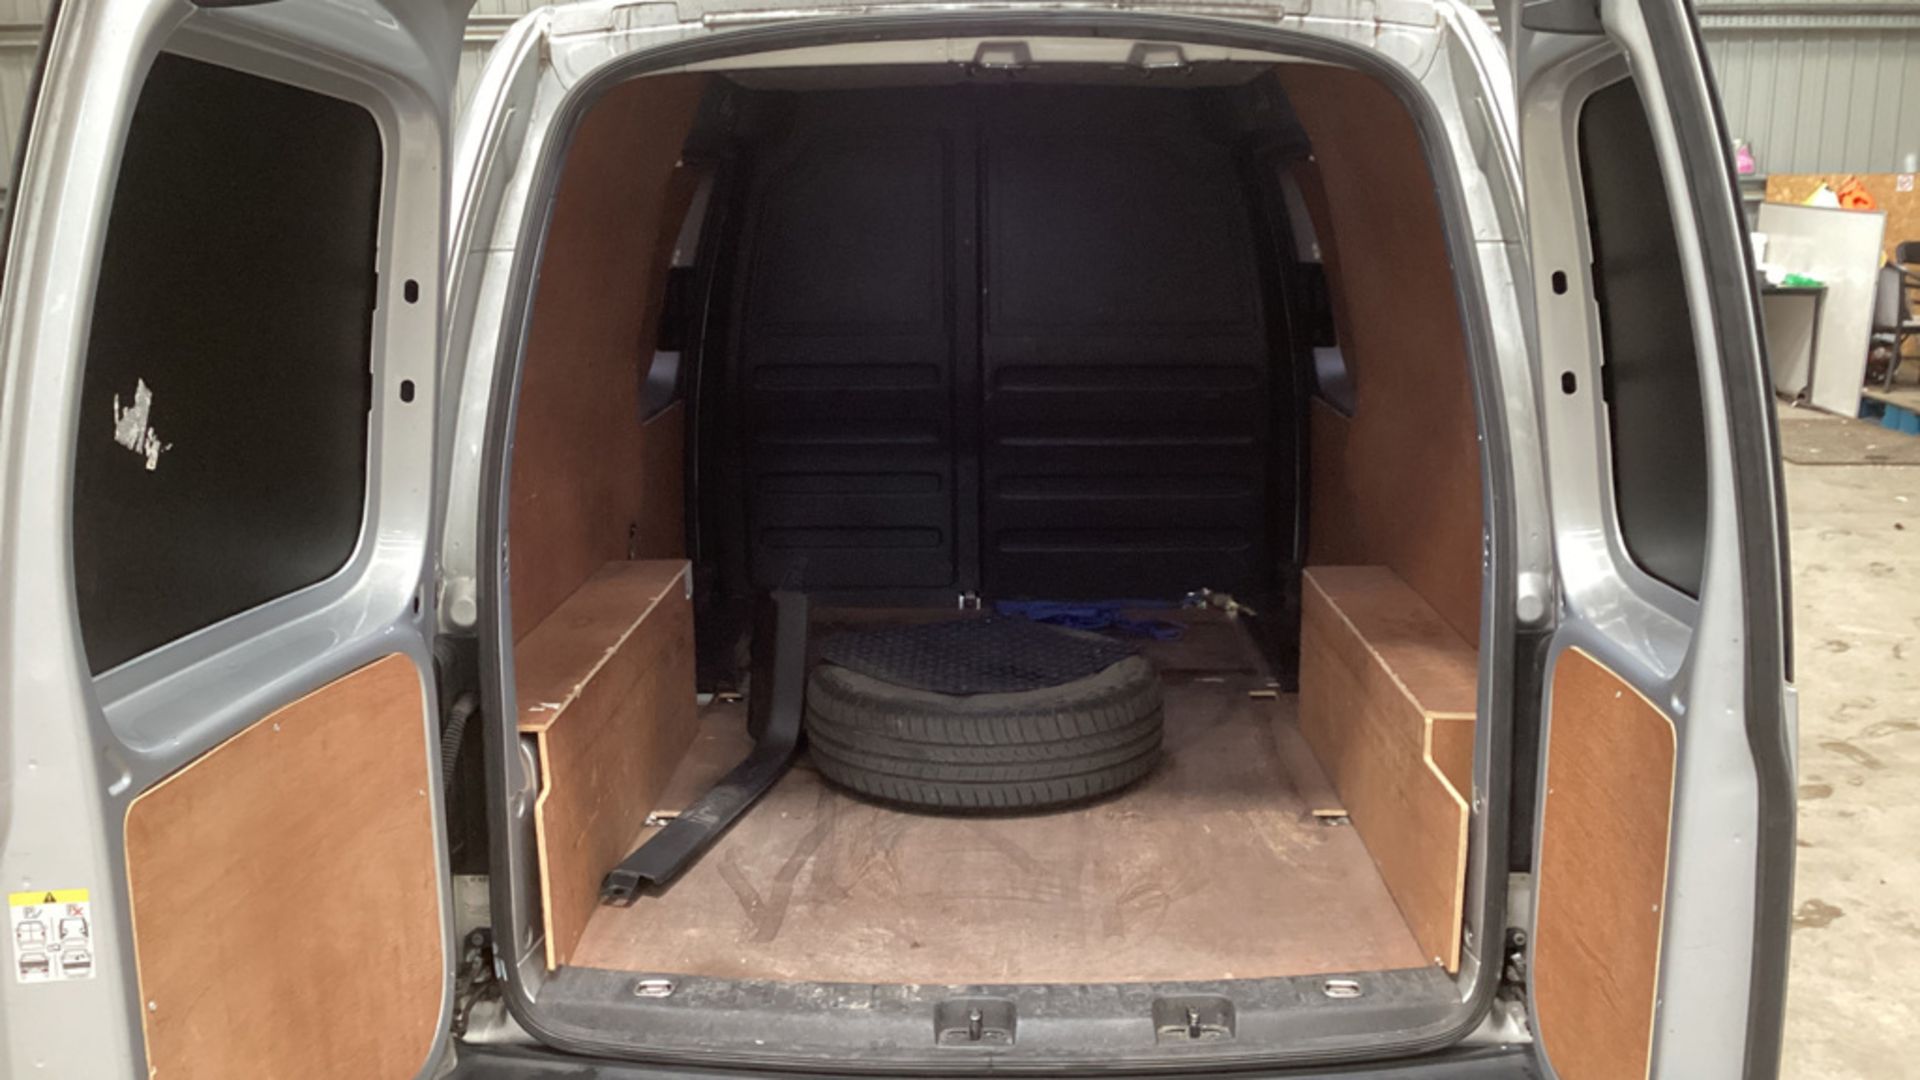 ** ON SALE ** Volkswagen Caddy Maxi 2.0 TDI BlueMotion DSG Automatic 2019 '19 Reg' - Panel Van - Image 4 of 8